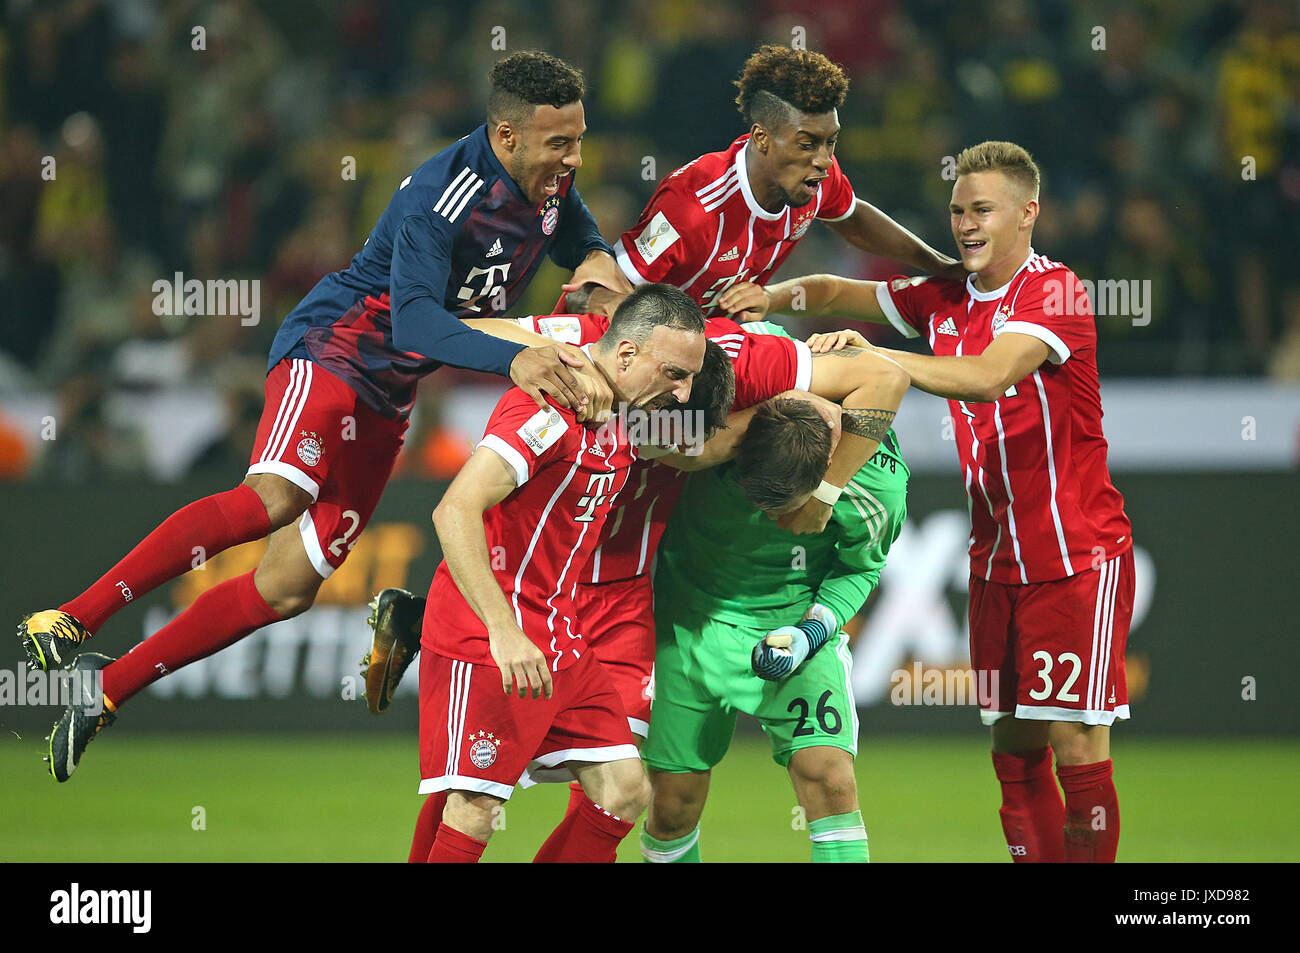 05.08.2017, DFL Supercup 2017, Borussia Dortmund - FC Bayern München, im Signal Iduna Park di Dortmund. Schlussjubel Bayern München foto: Cronos/MIS Foto Stock